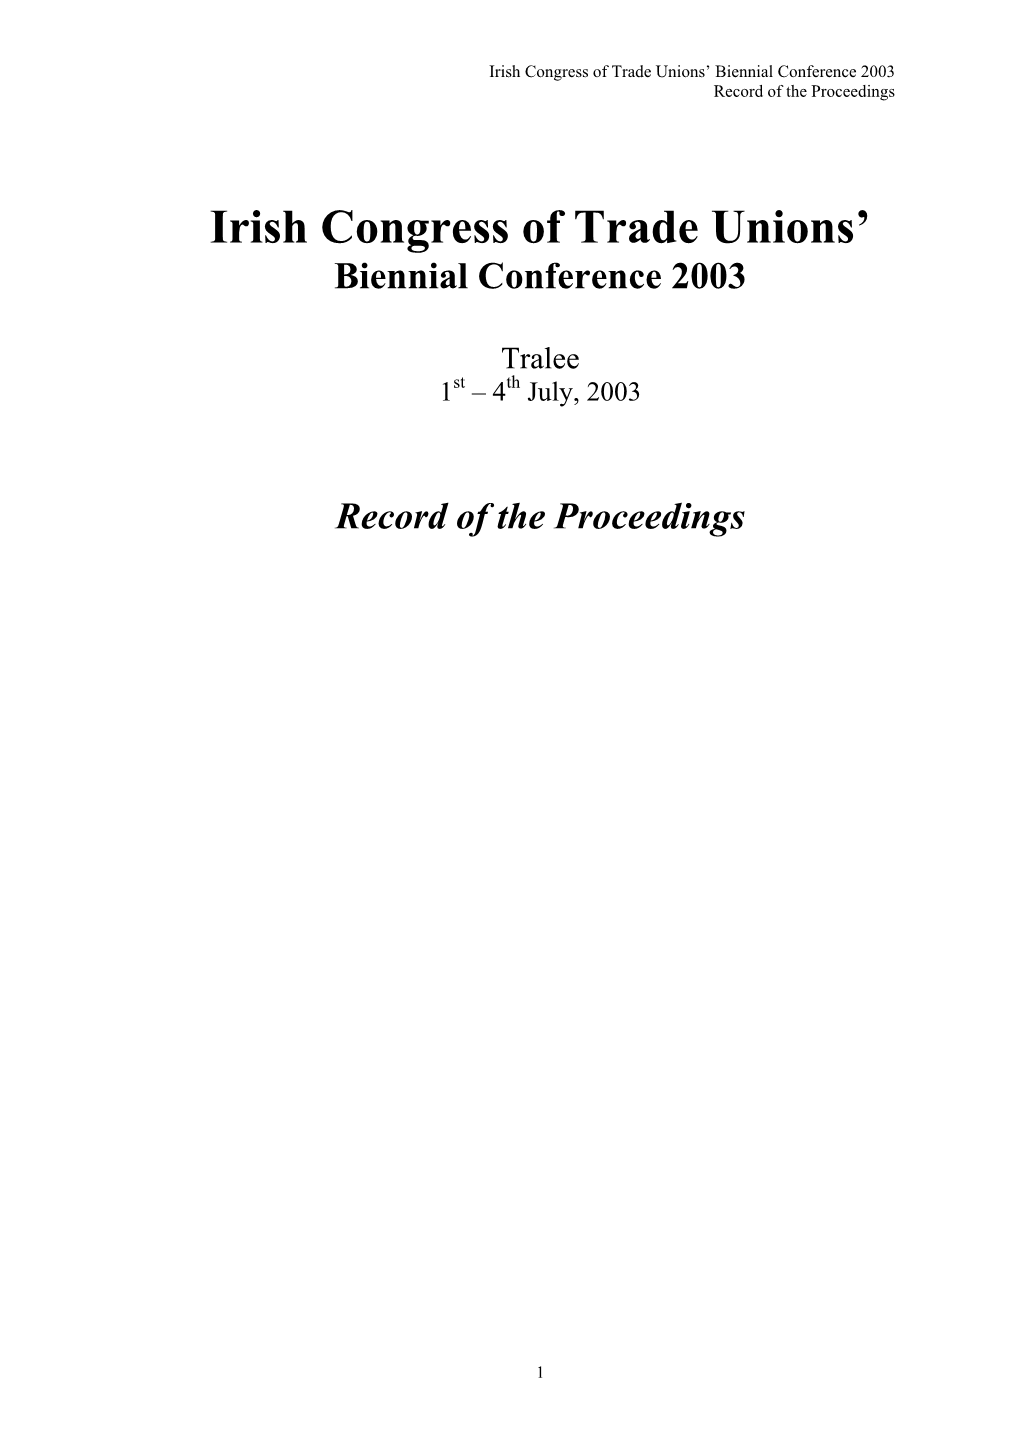 Irish Congress of Trade Unions' Biennial Conference 2003 Record